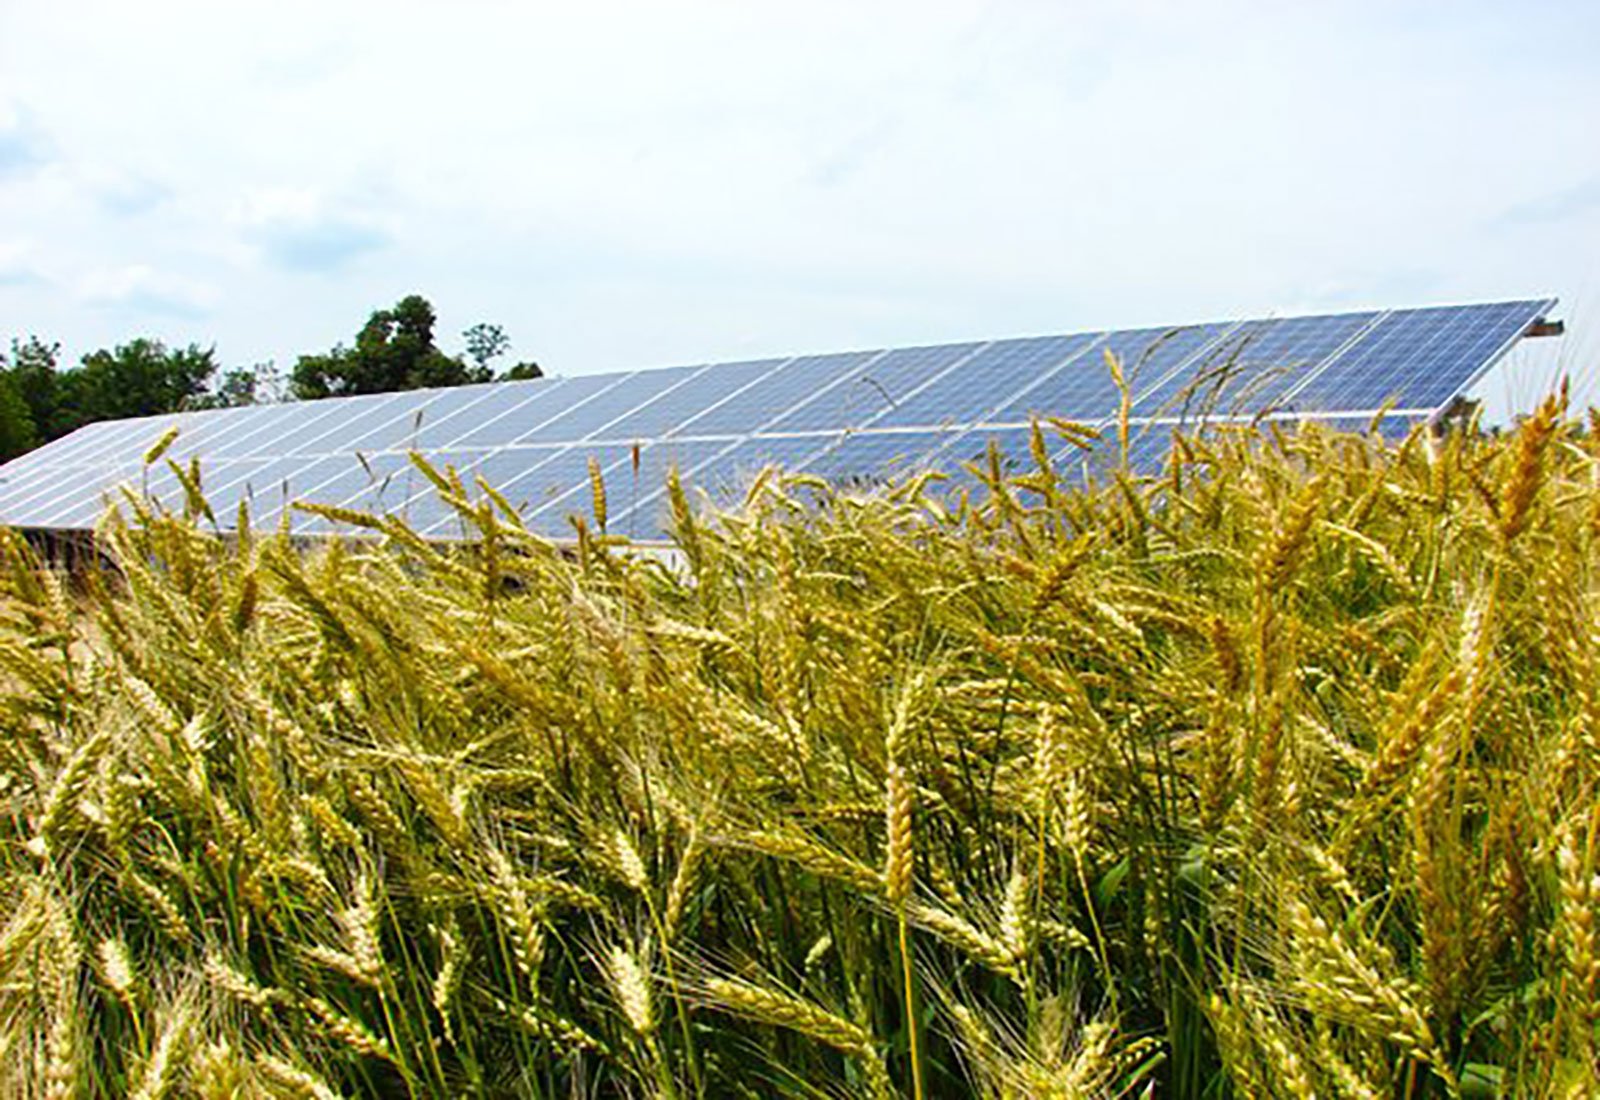 A row of solar panels in a field in Ownsboro.